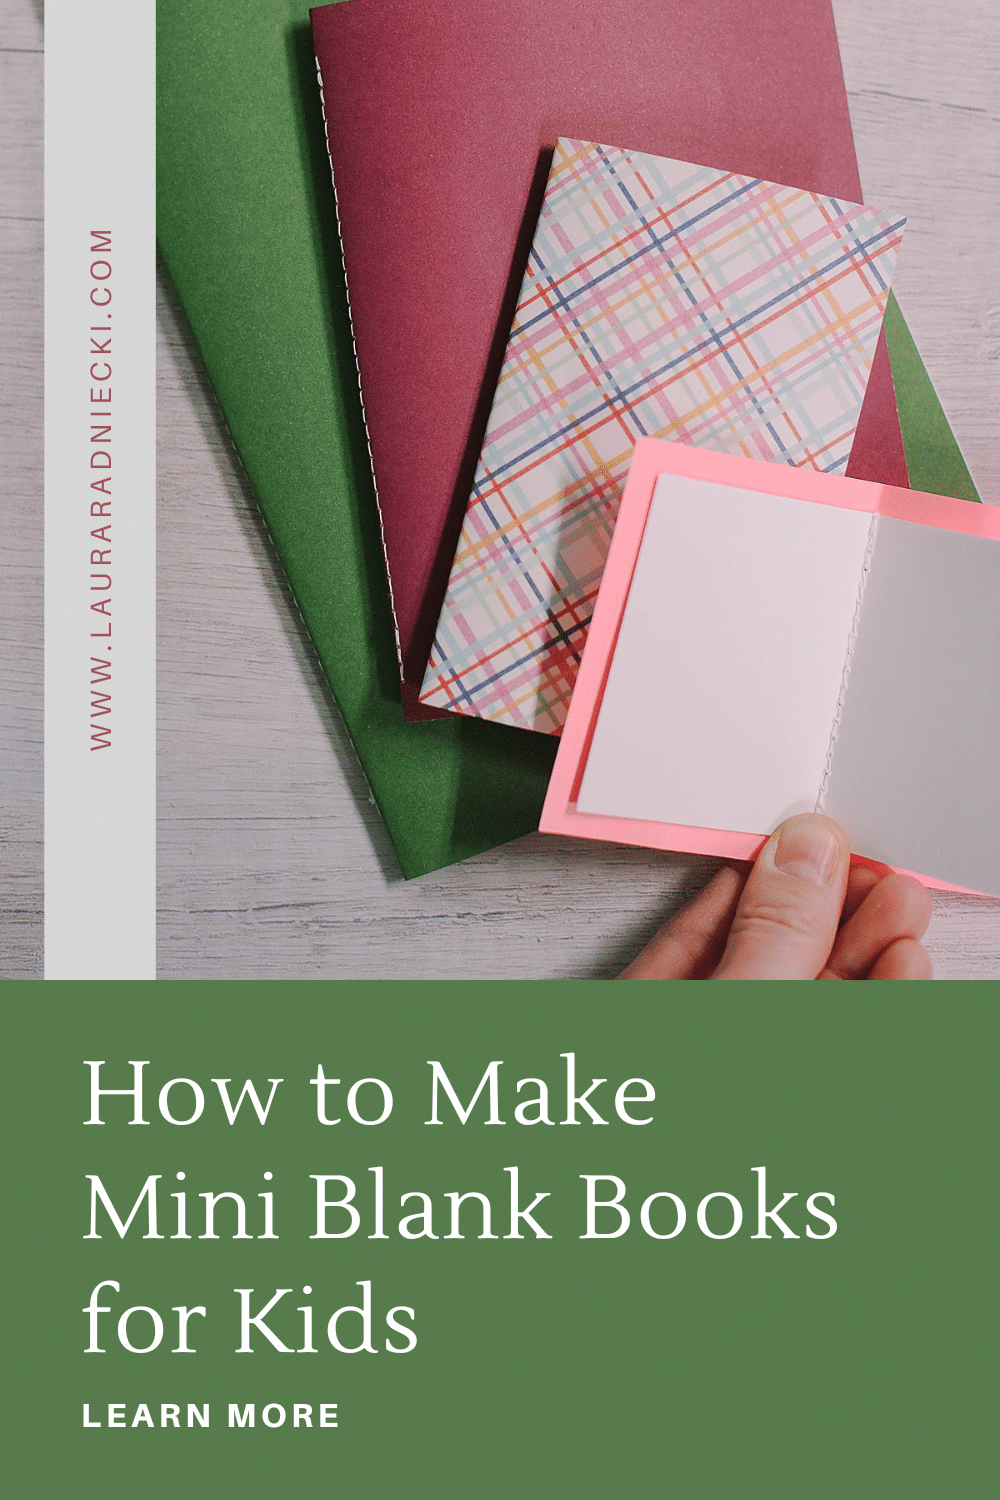 How to Make Mini Blank Books for Kids